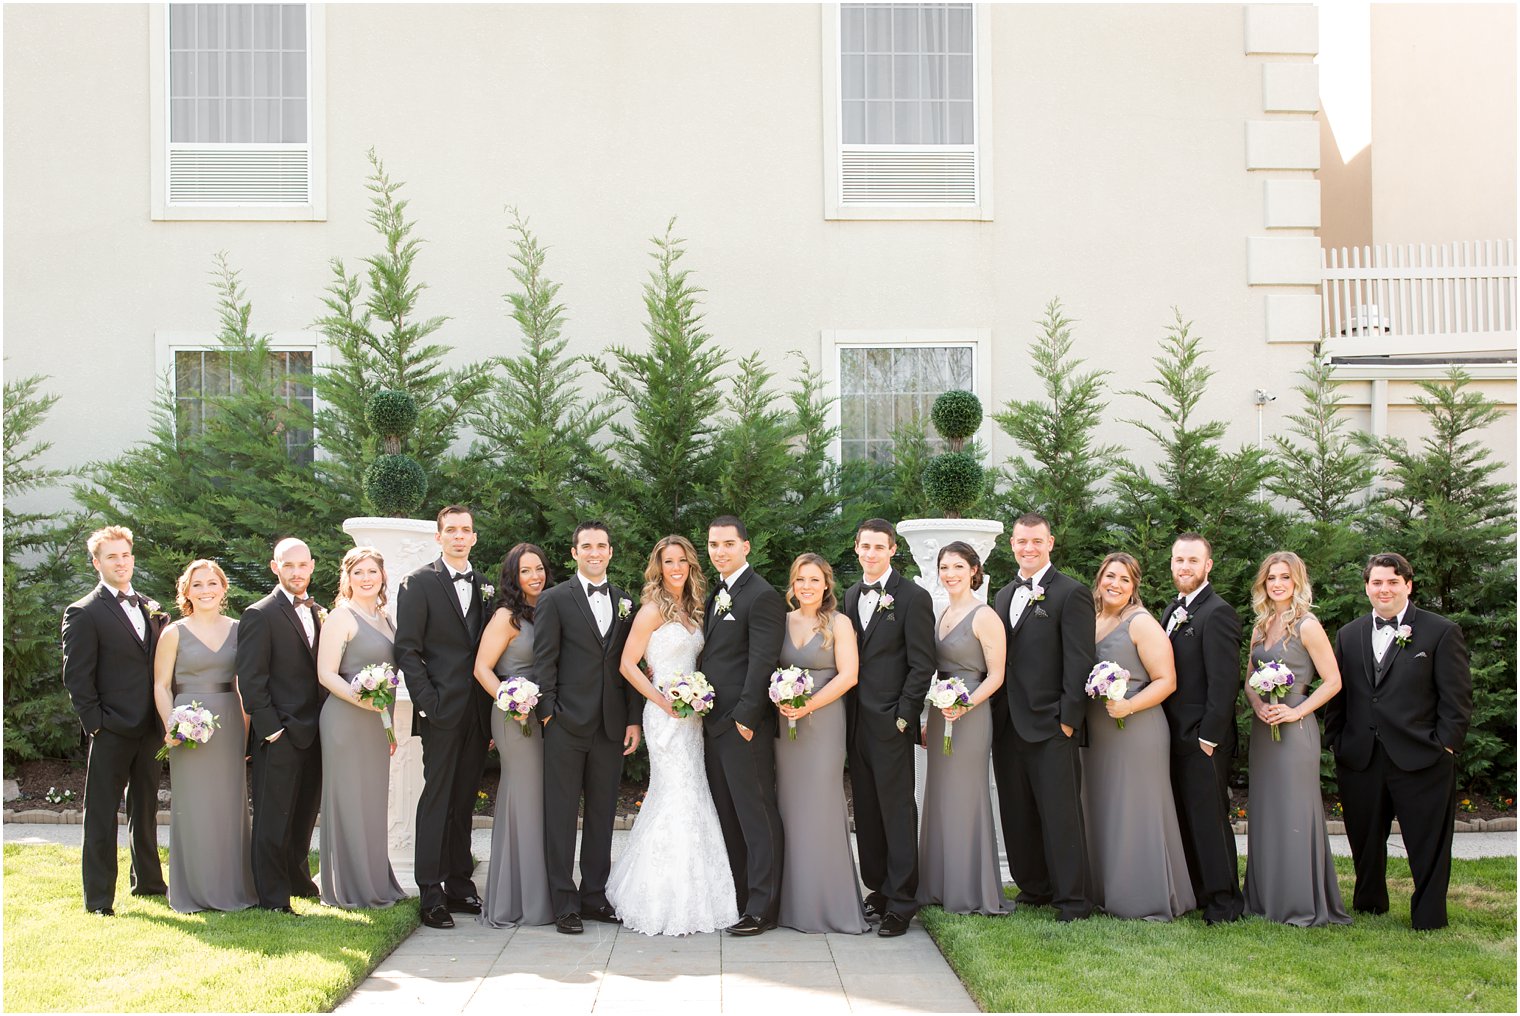 Bridal Party wearing gray and black | Photos by Idalia Photography